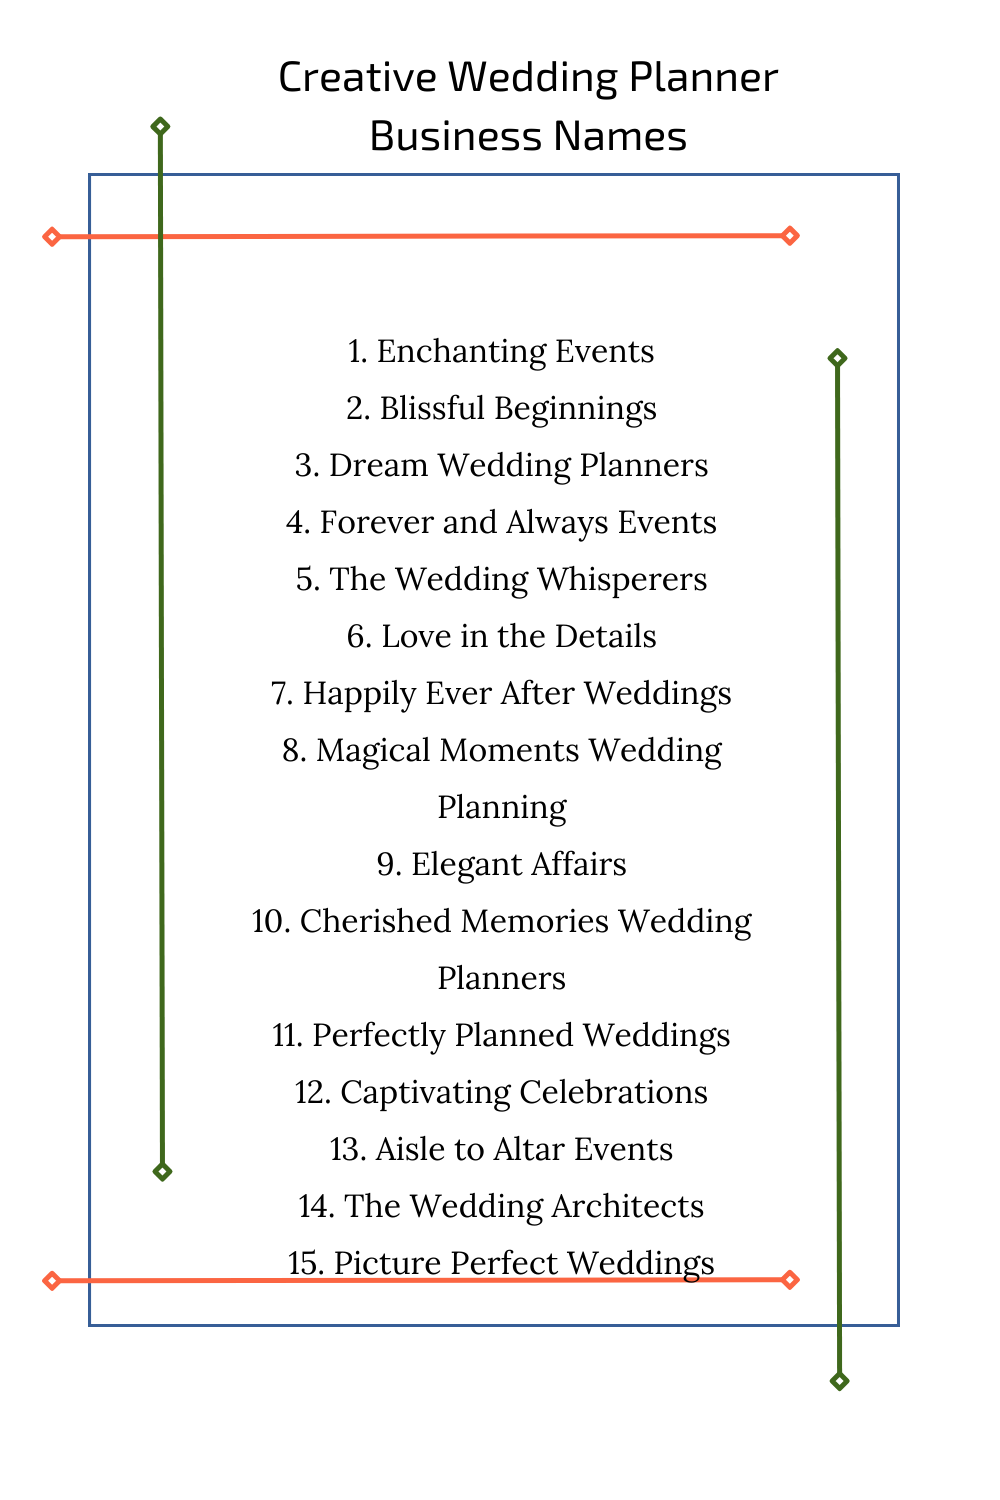 Creative Wedding Planner Business Names